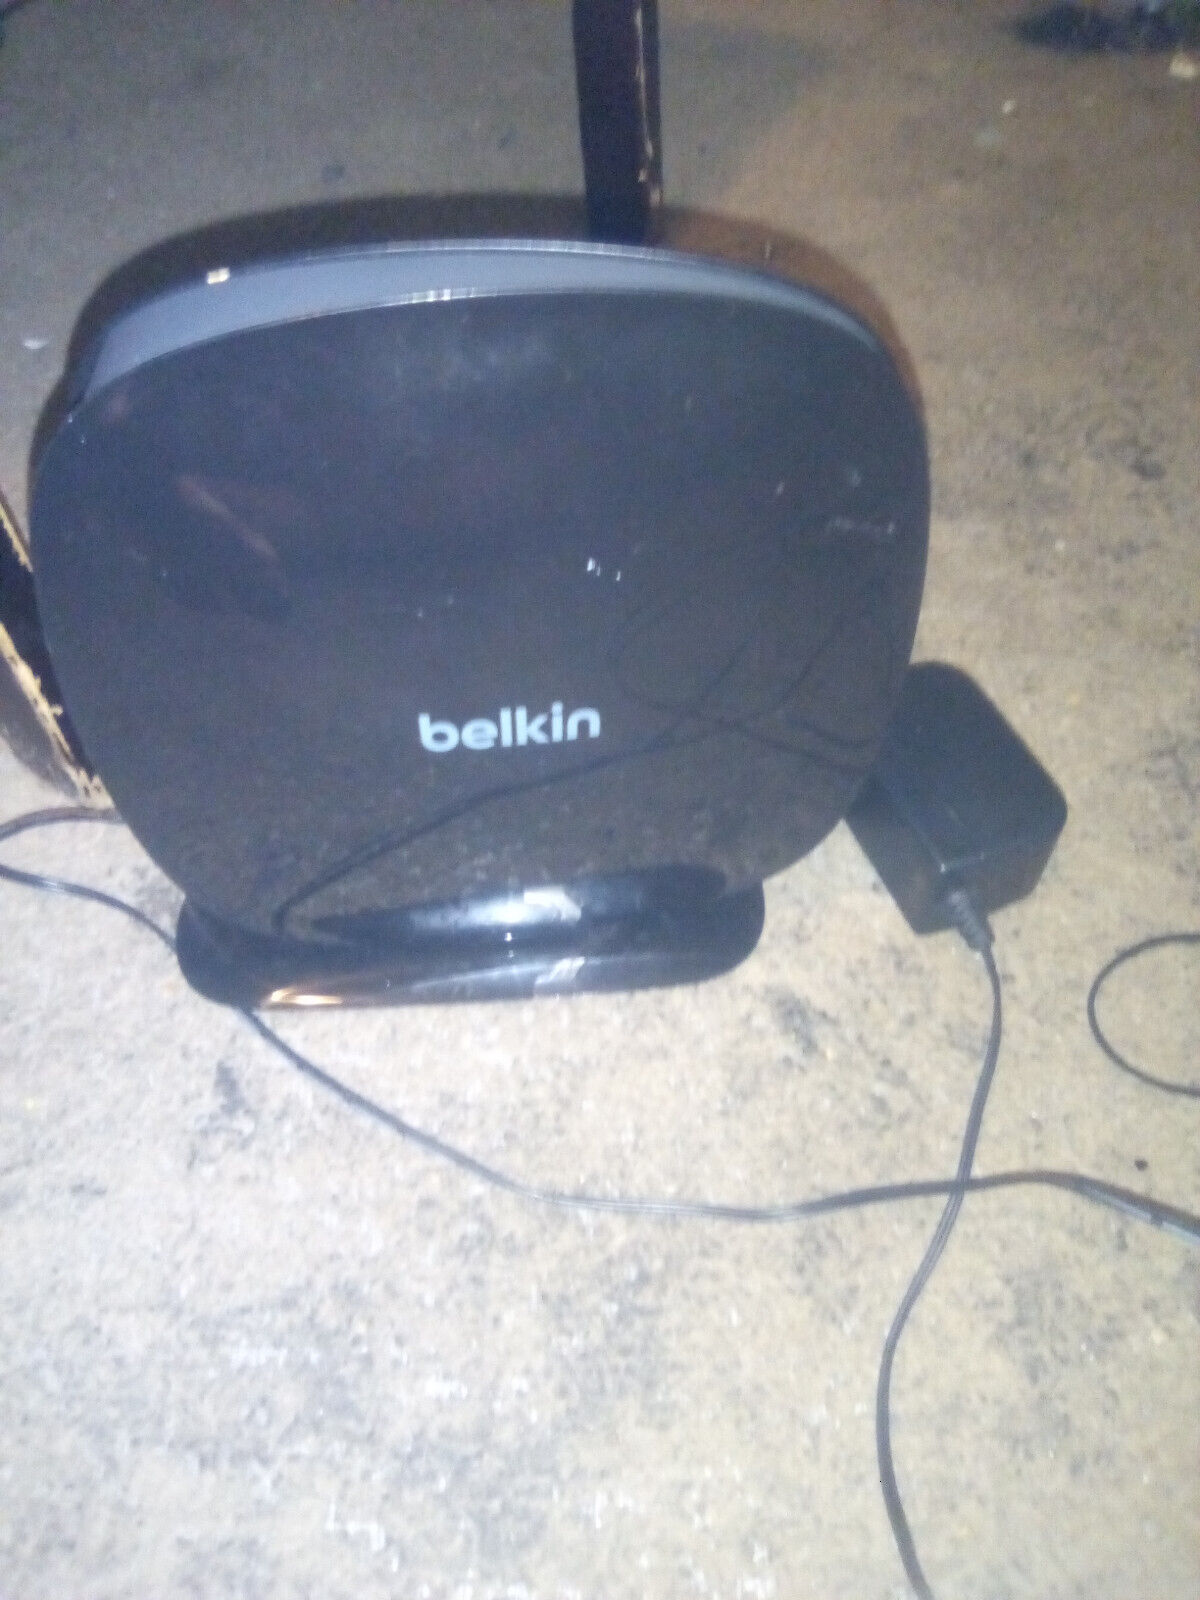 Belkin AC1200 DB Wi-Fi Dual-Band AC+ Gigabit Router F9K1113v4